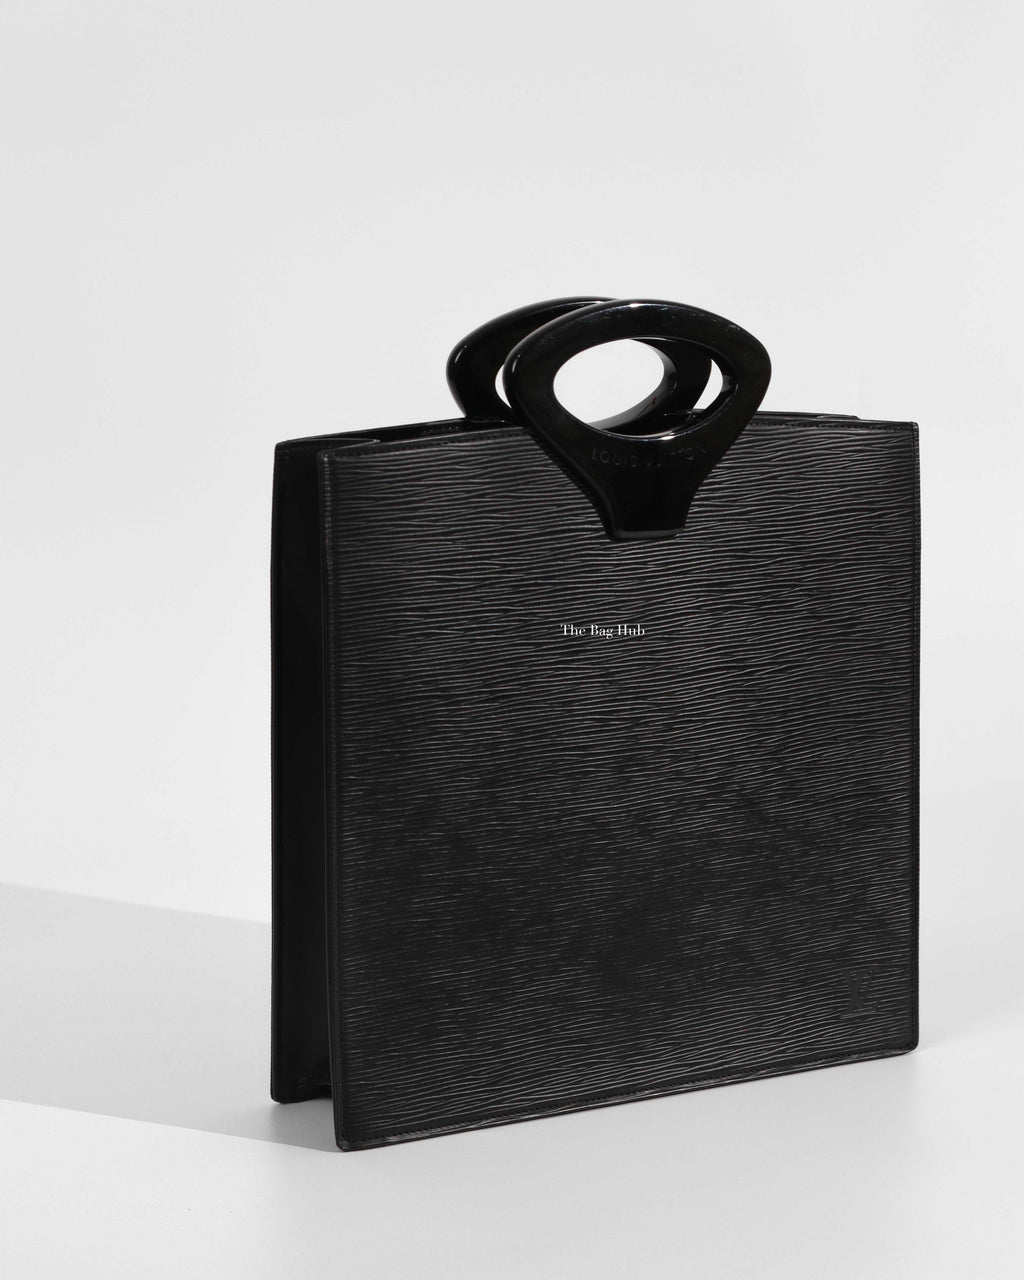 Louis Vuitton Black Epi Ombre Tote Bag